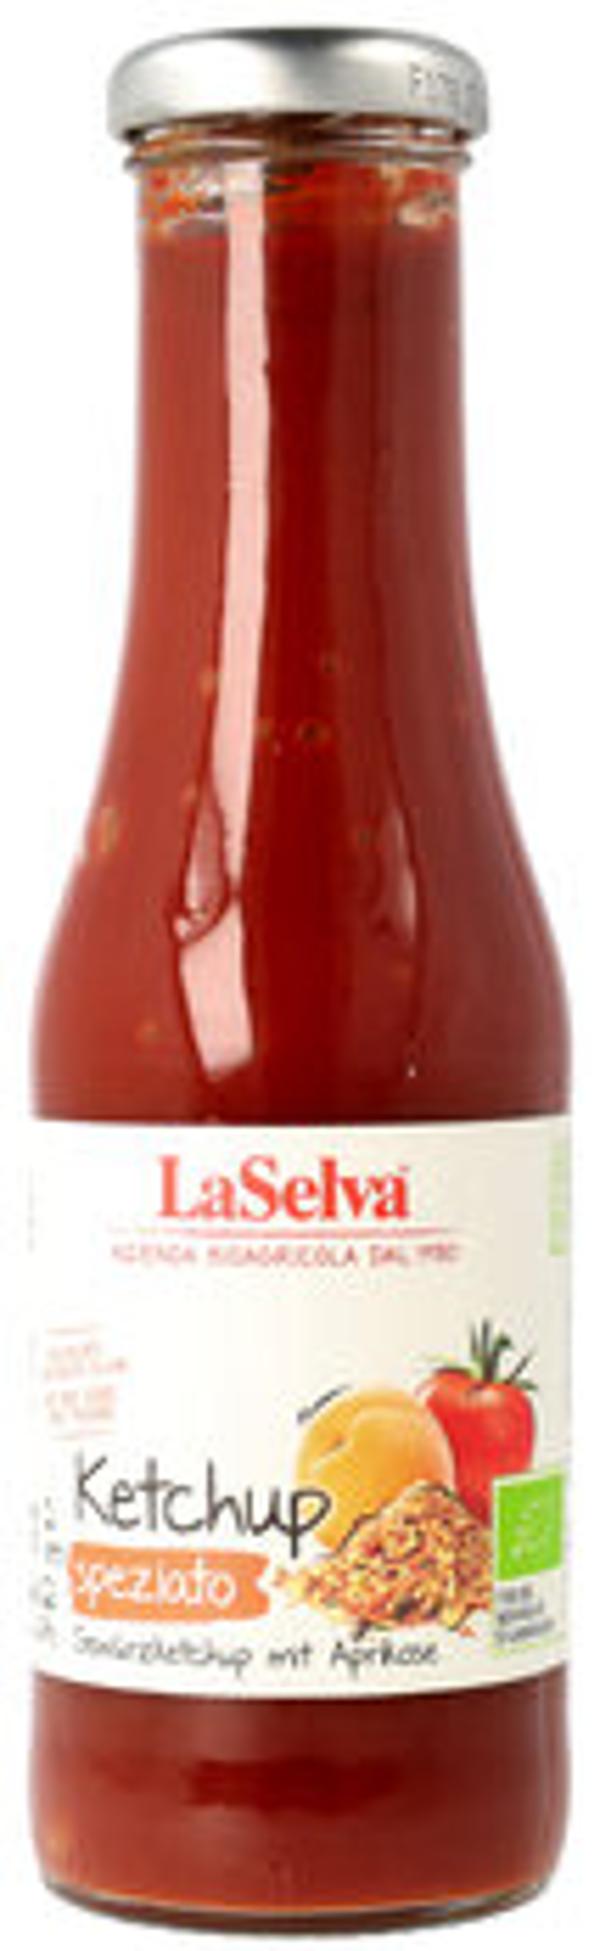 Produktfoto zu Ketchup speziato mit Aprikose 340g